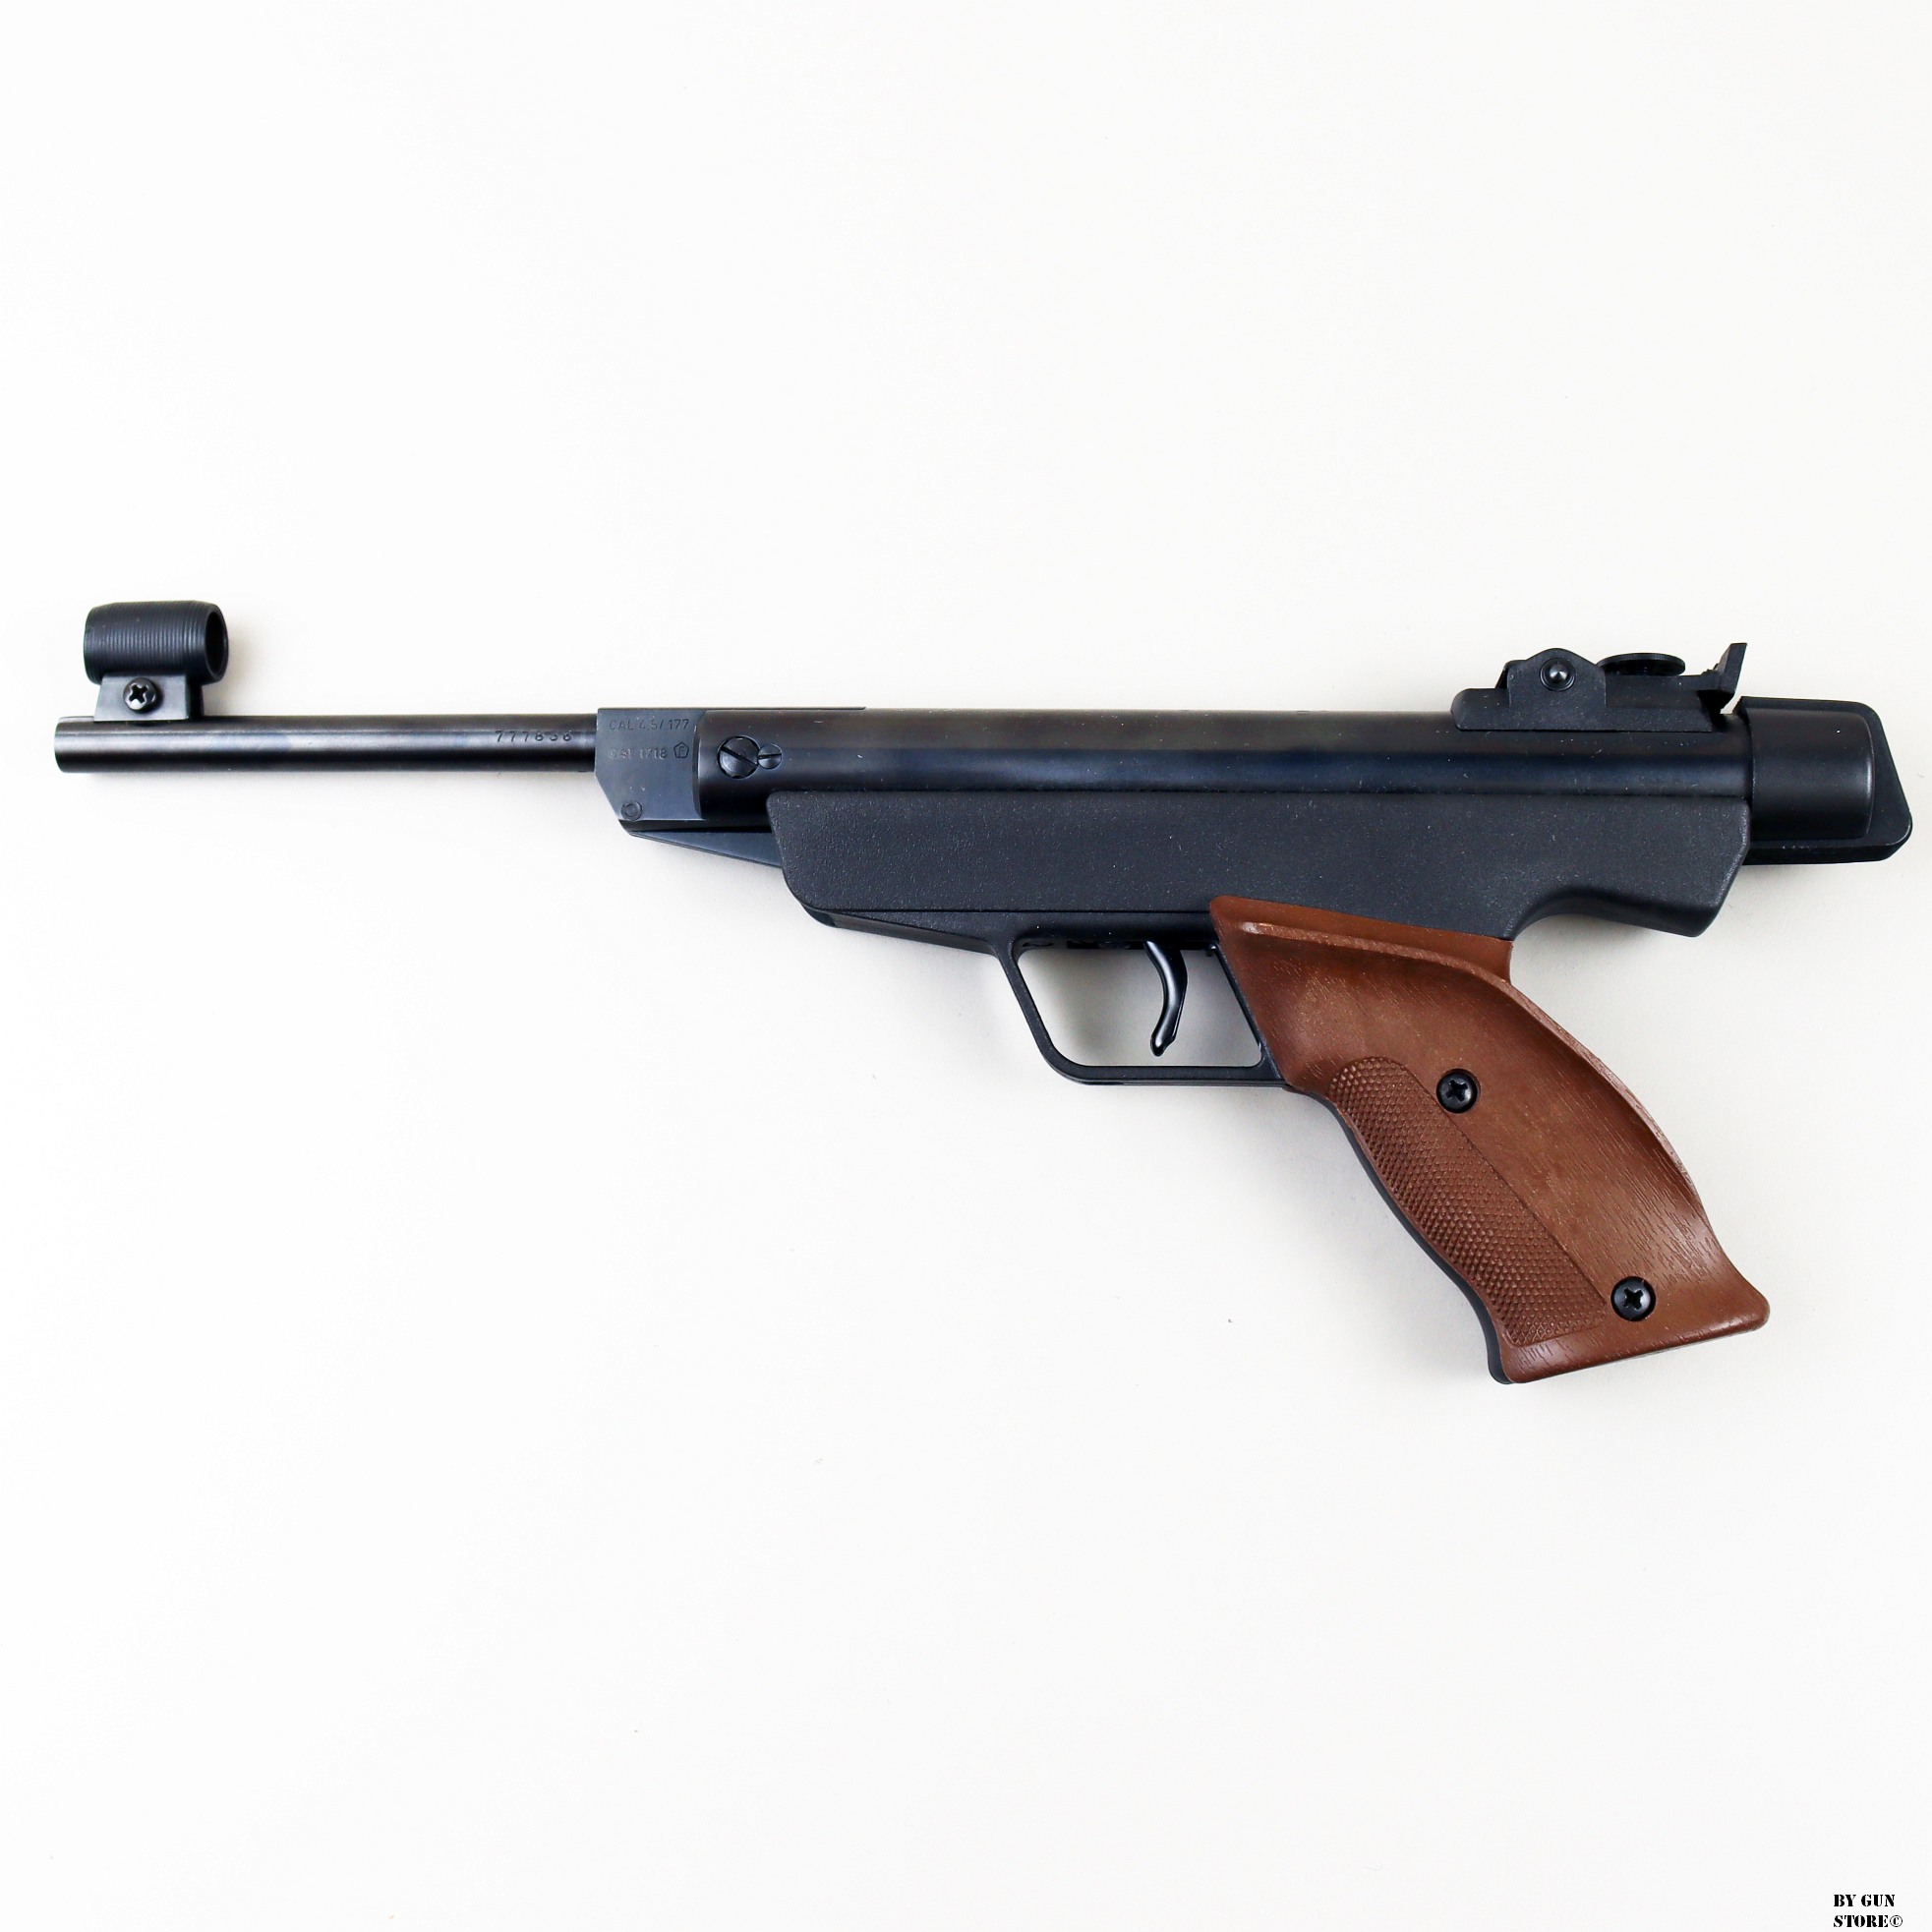 Pistola aria compressa Diana mod. 5 cal. 4.5 matr. 777836 - Gun Store Bunker